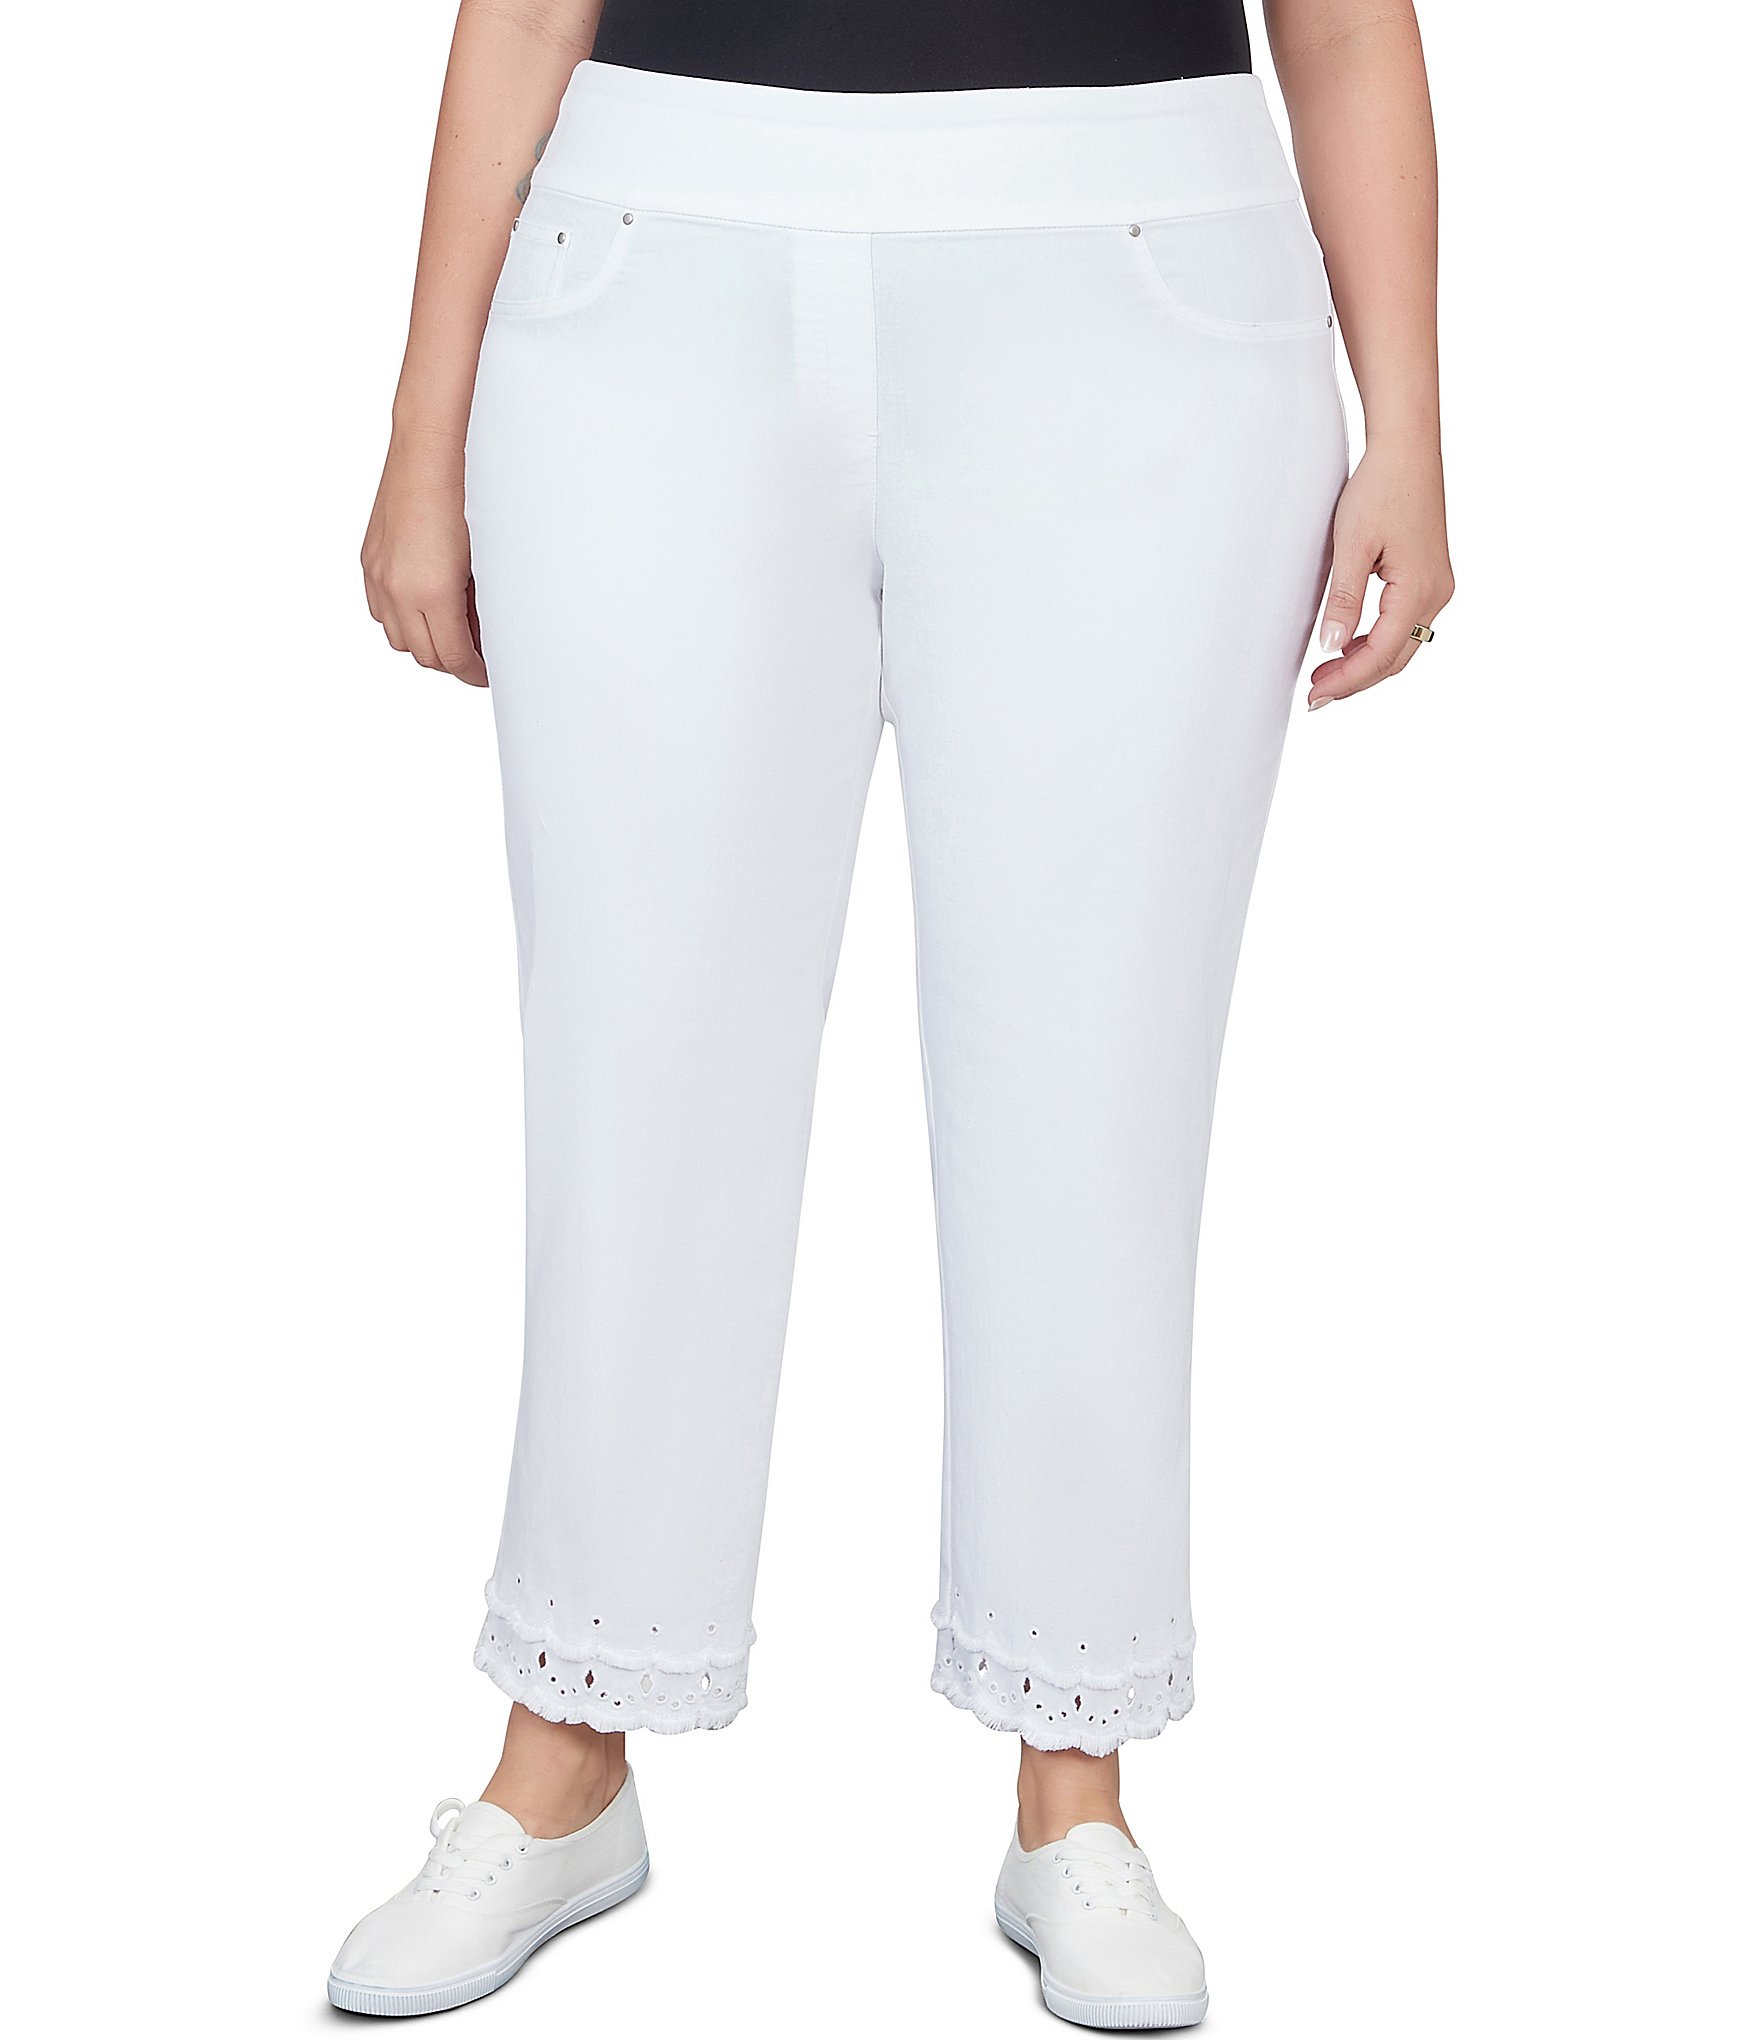 white pants: Women's Plus Size Clothing